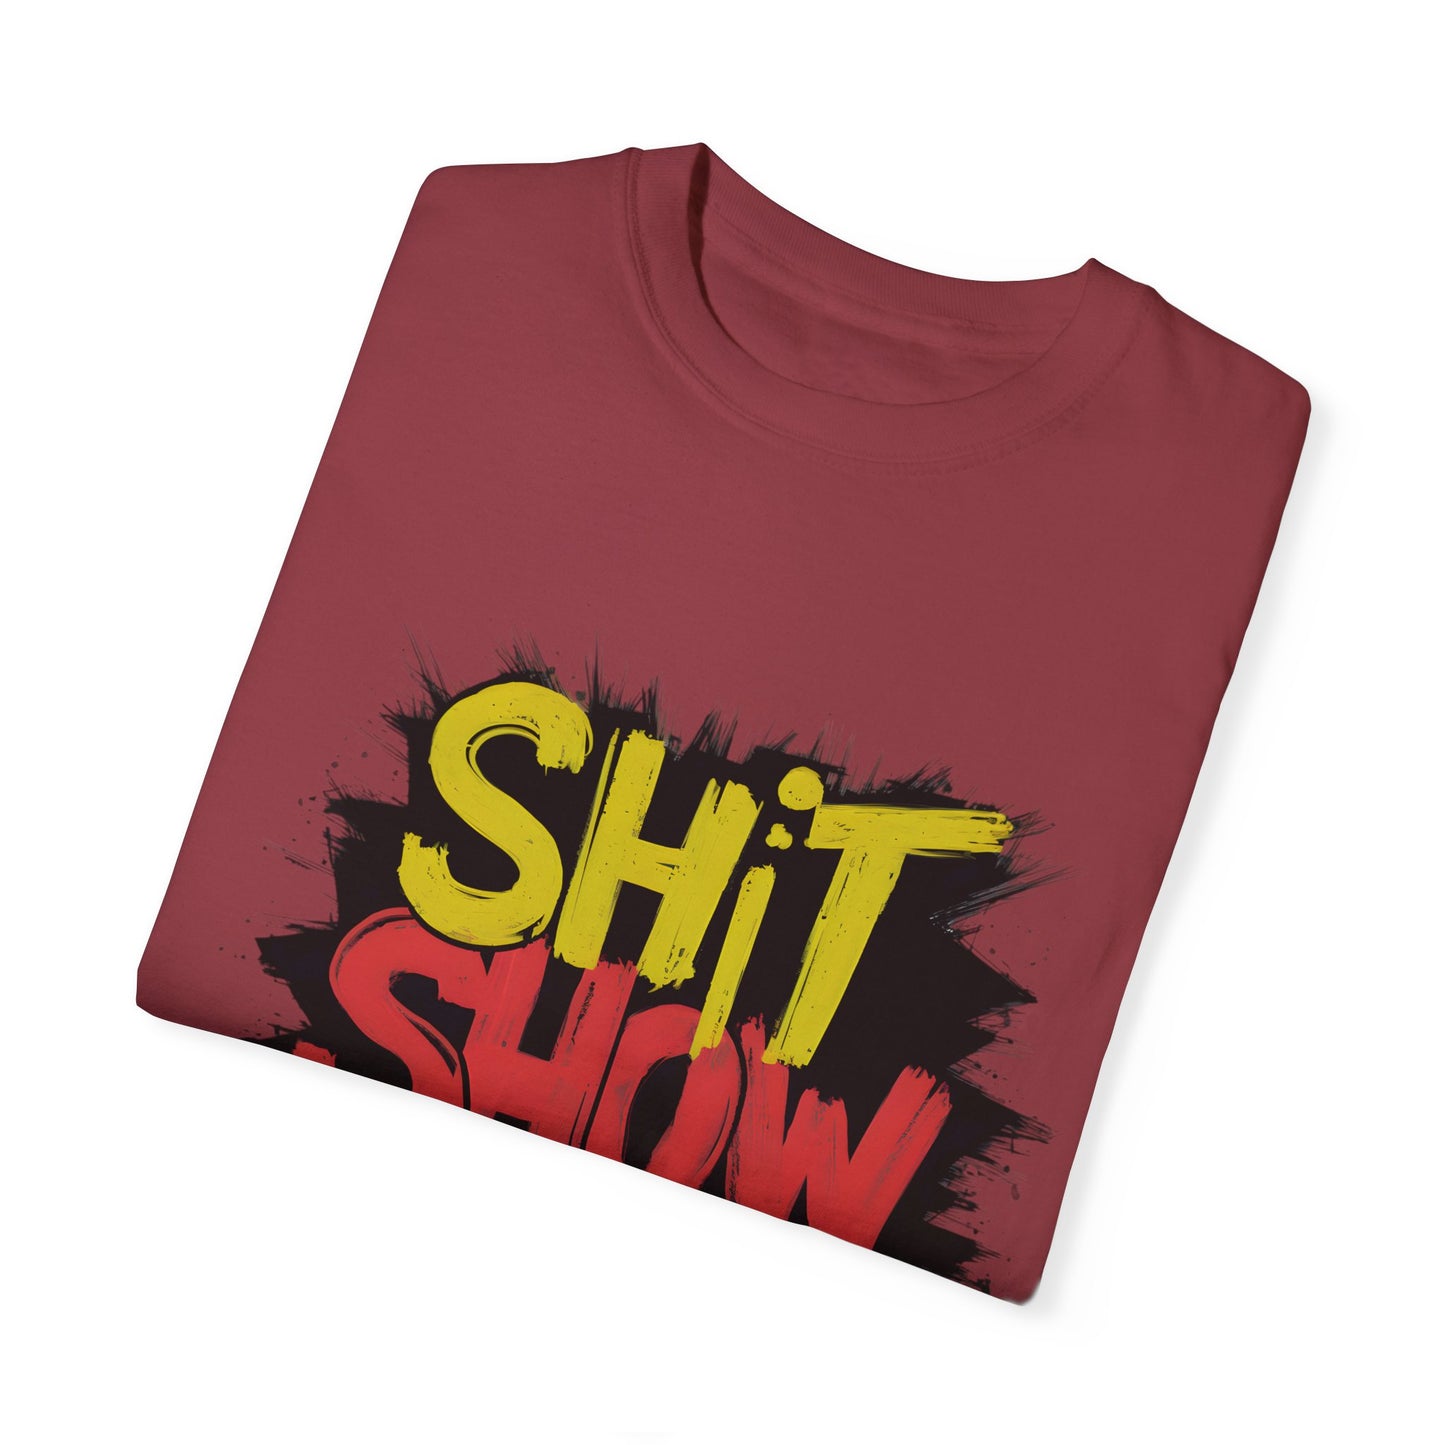 Shit Show Supervisor Urban Sarcastic Graphic Unisex Garment Dyed T-shirt Cotton Funny Humorous Graphic Soft Premium Unisex Men Women Chili T-shirt Birthday Gift-35